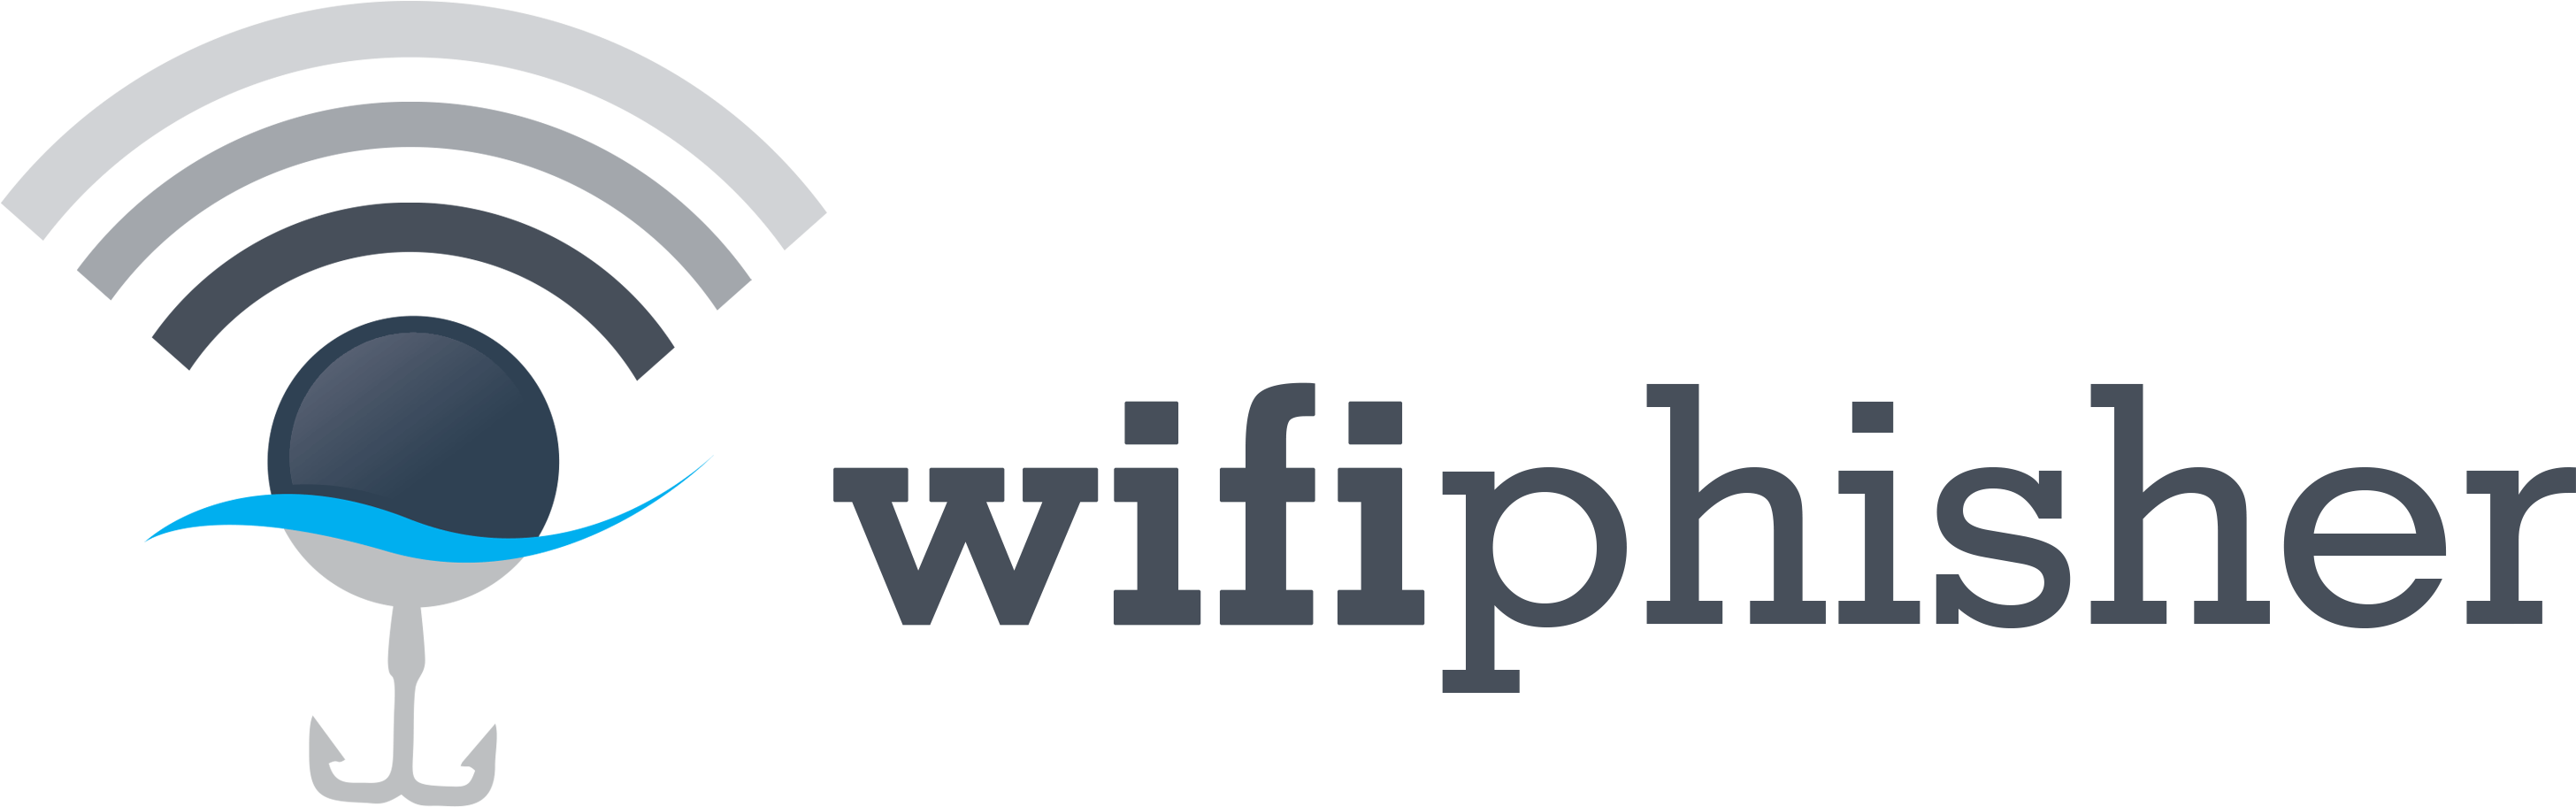 Wifiphisher Tool Logo